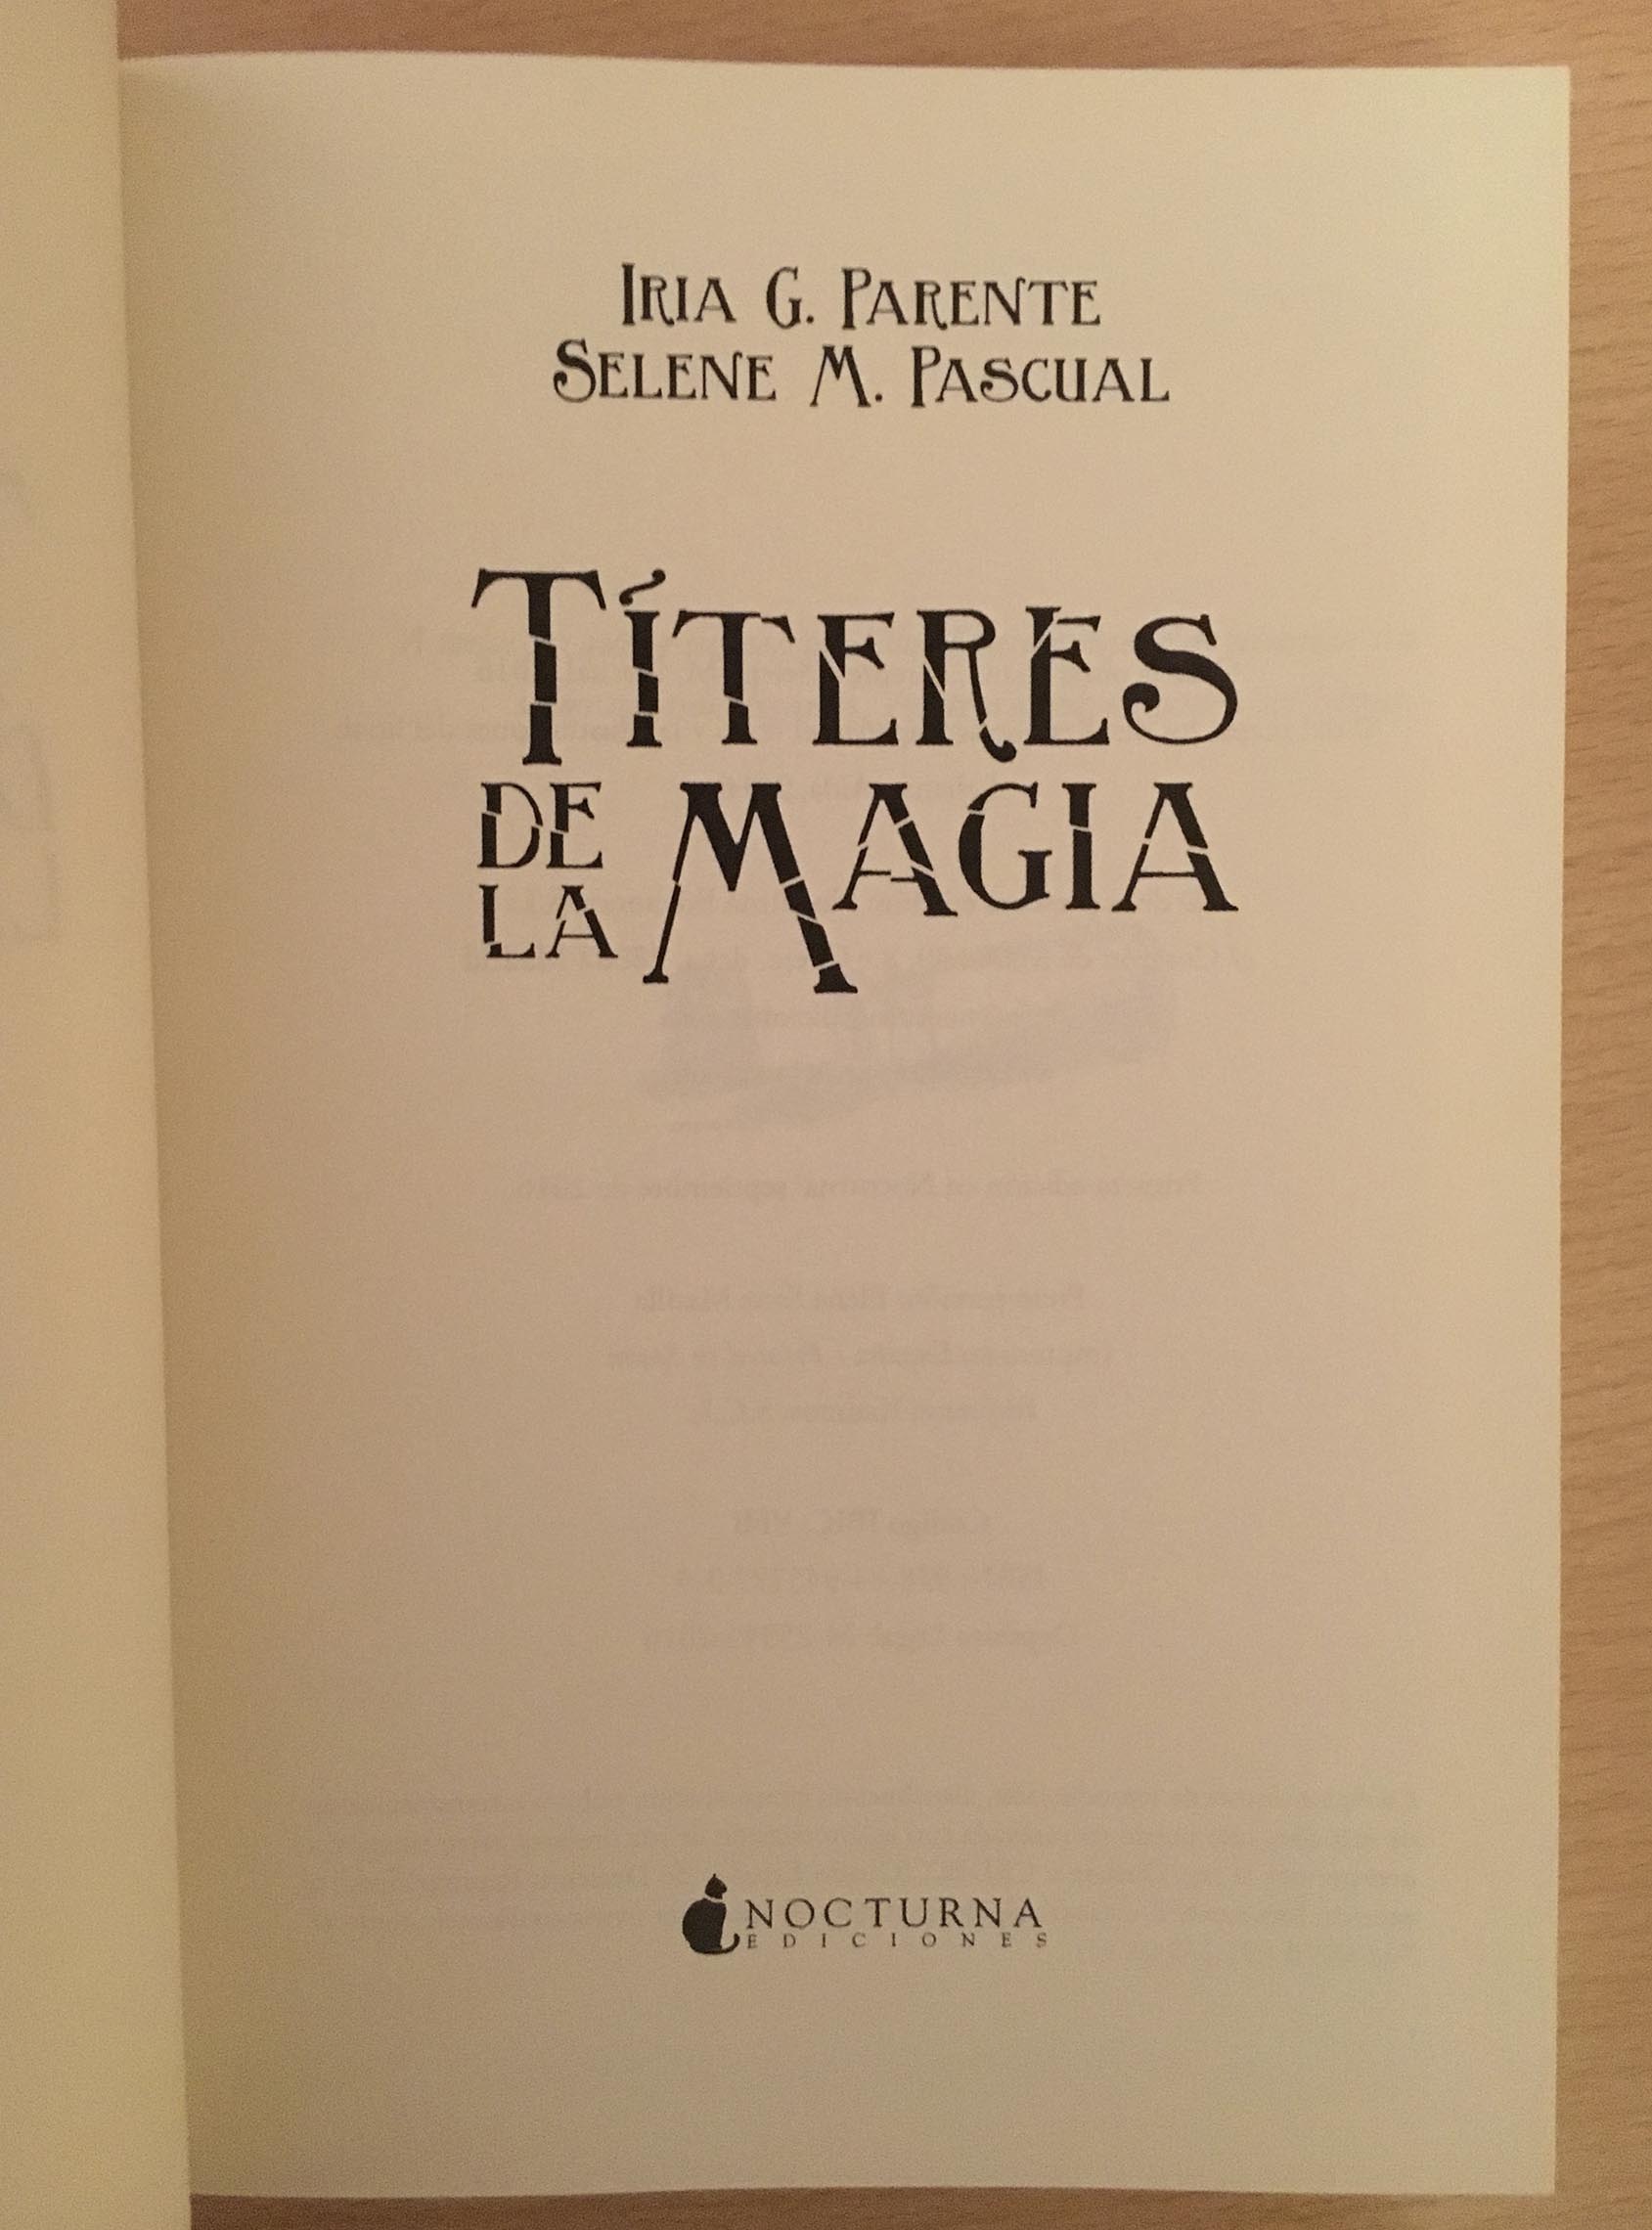 Títeres de la magia, de Iria G. Parente y Selene M. Pascual - Reseña